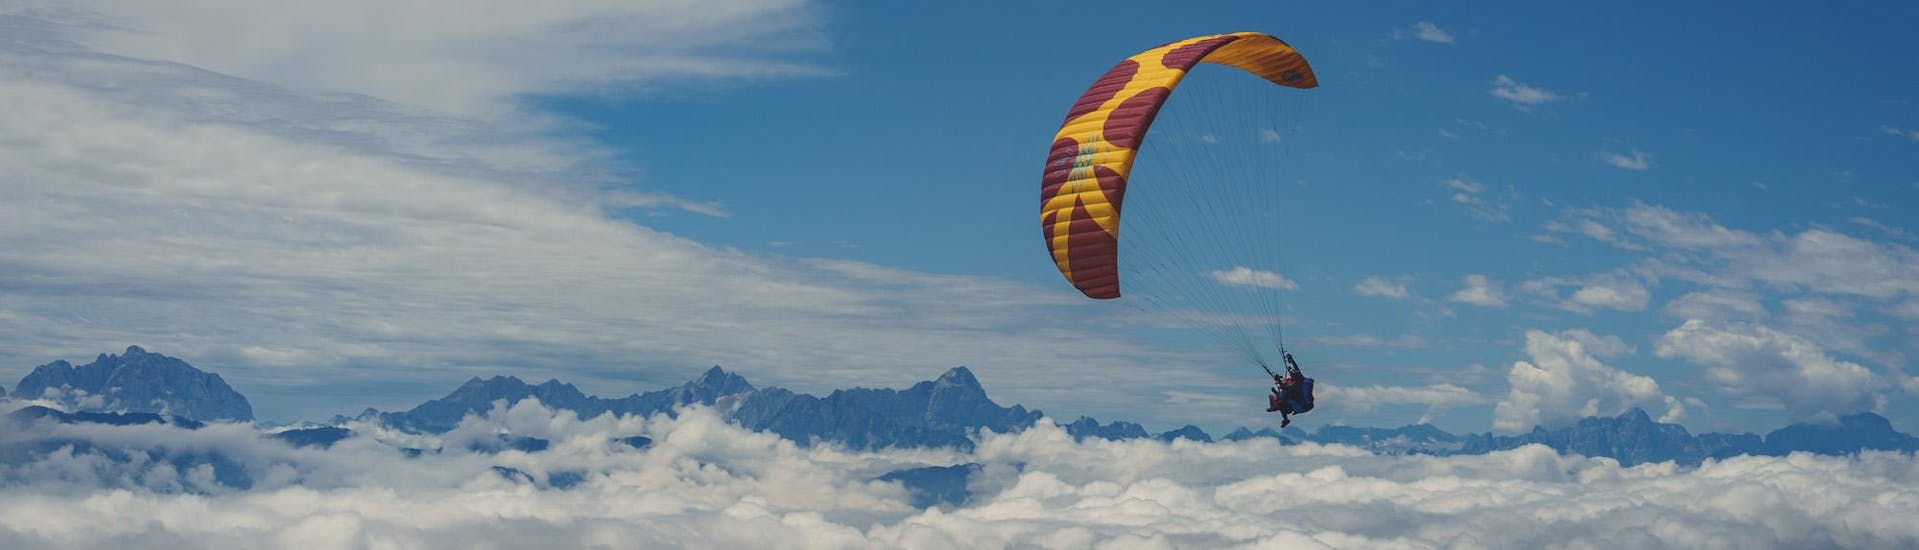 Hoog boven de wolken tijdens tandem paragliden in Karinthië - Thermal Flight met Best Place - Flieger Base Villach.